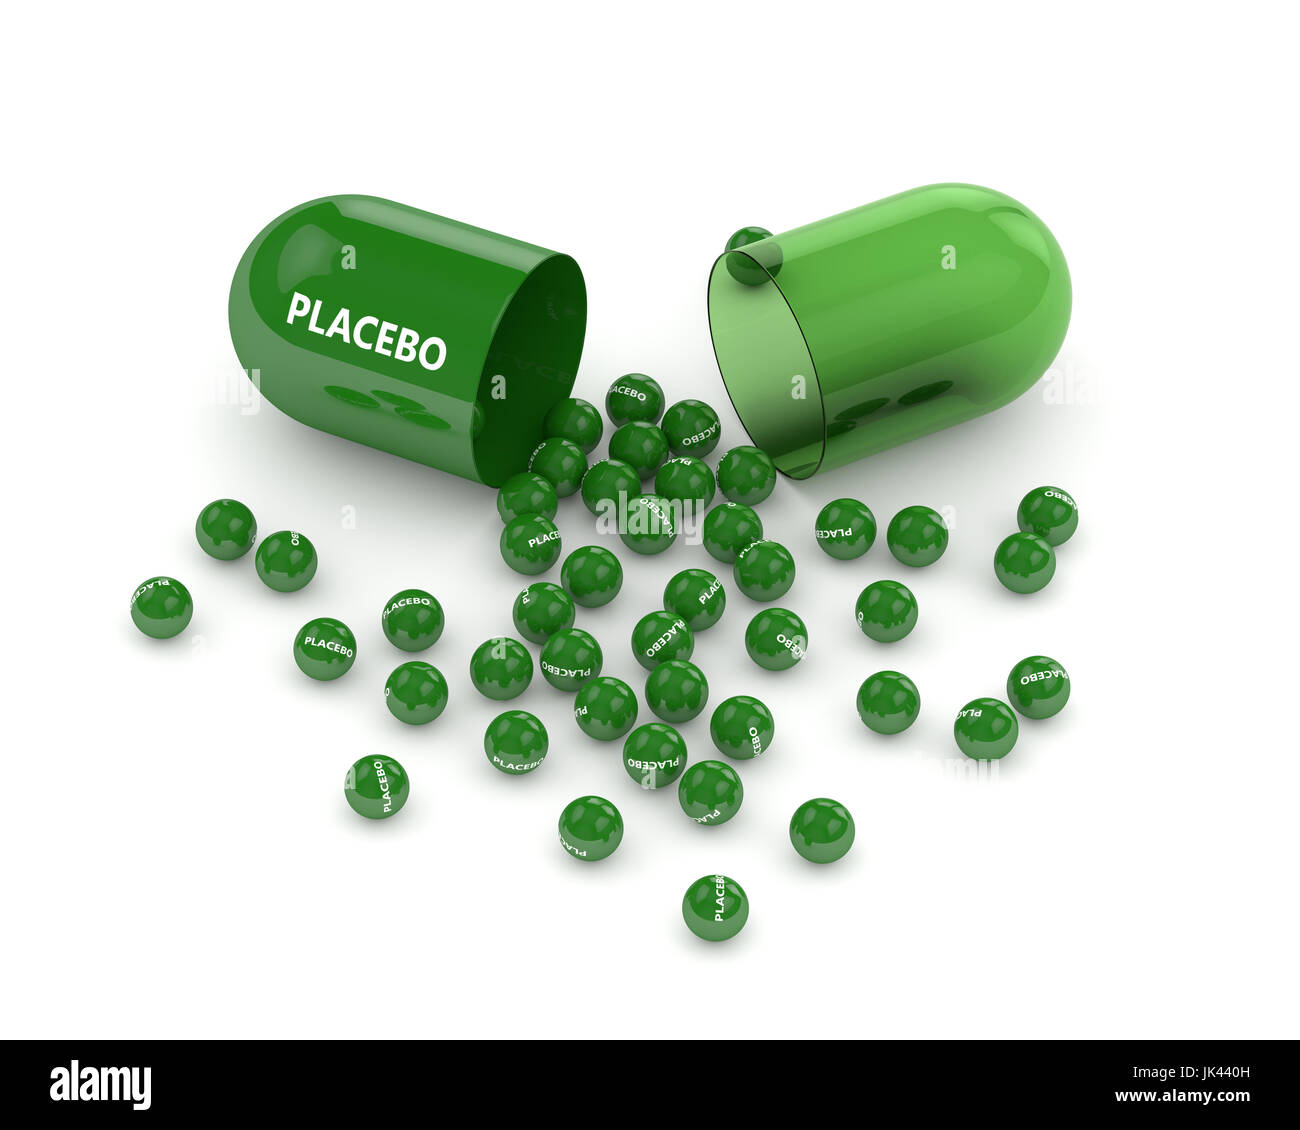 3D Render de píldoras placebo con gránulos aislados sobre fondo blanco. Foto de stock